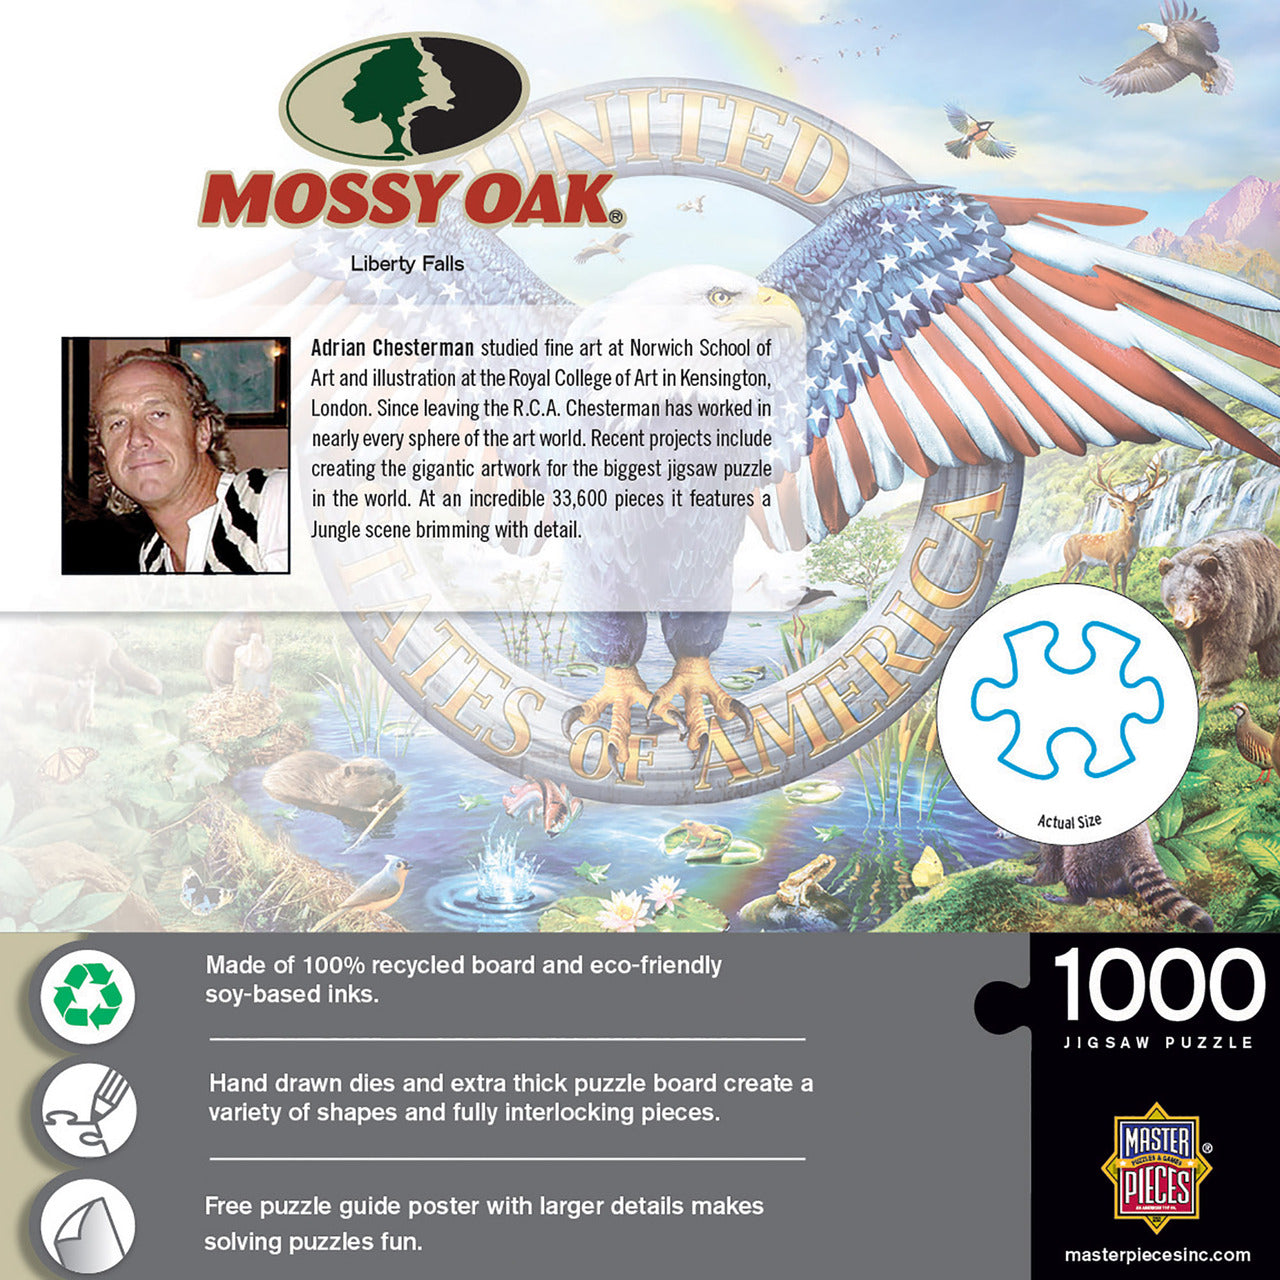 Mossy Oak - Liberty Falls 1000 Piece Jigsaw Puzzle by Masterpieces